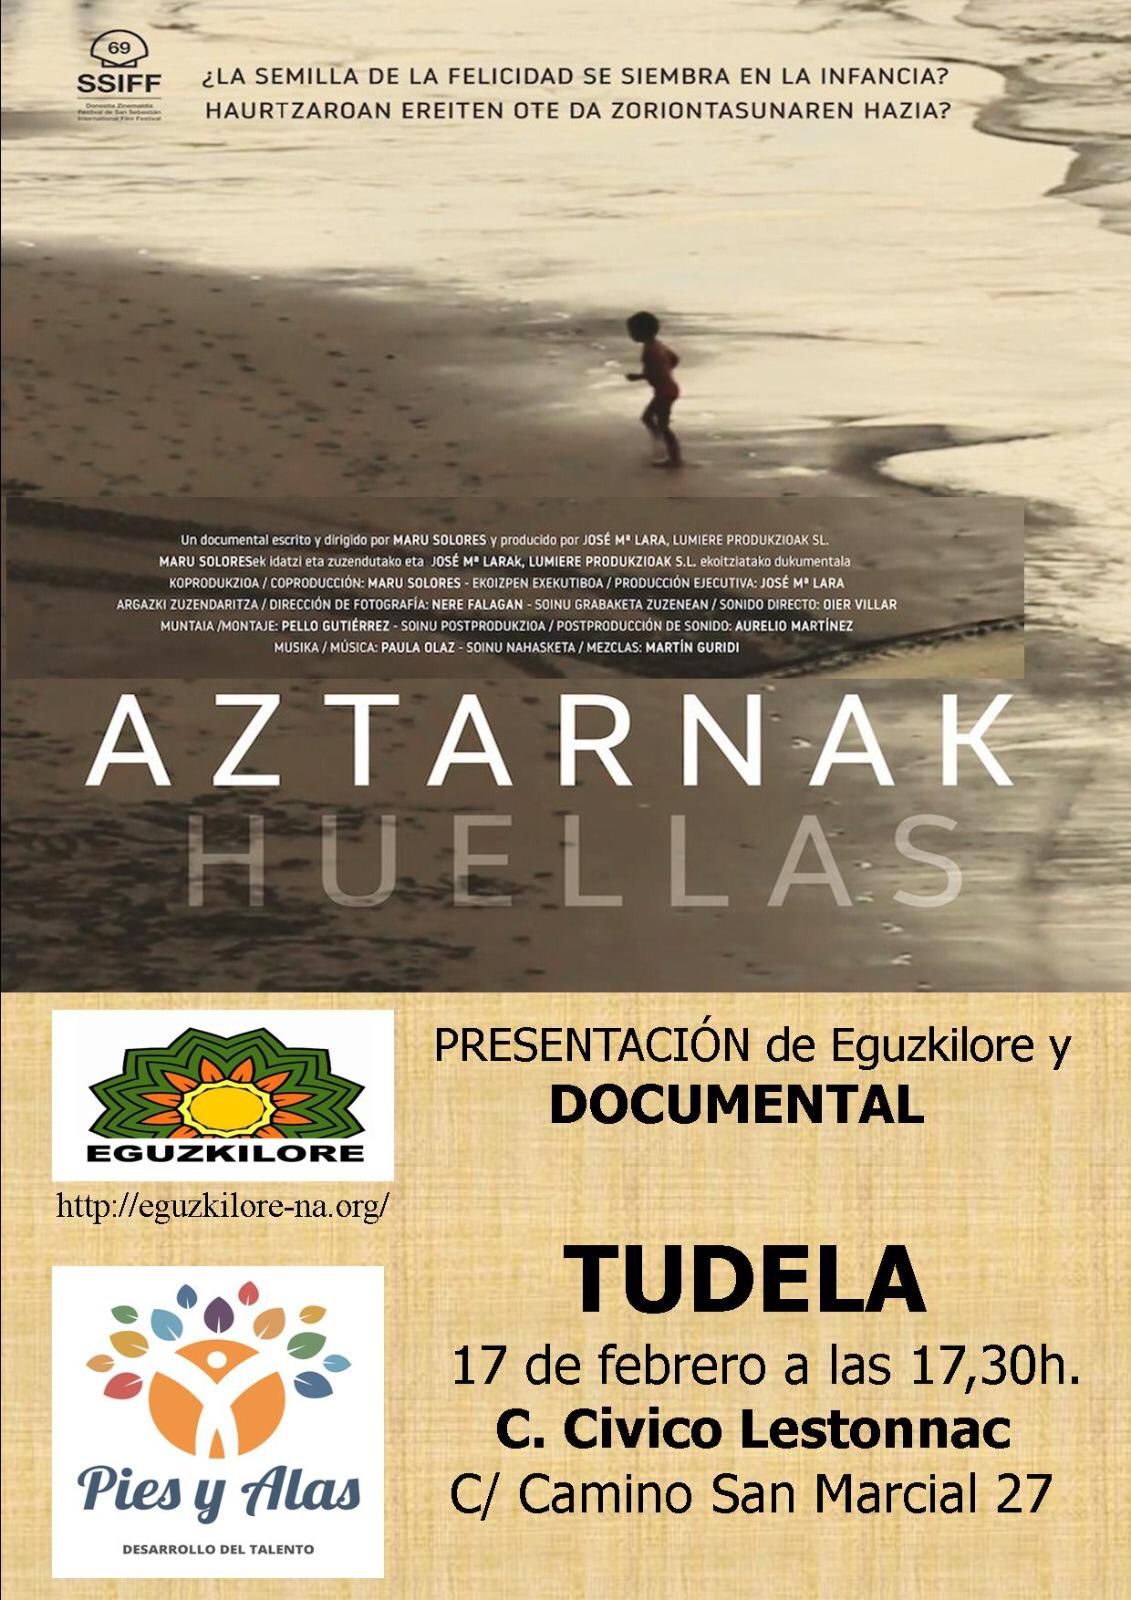 Aztarnak – Huellas (Documental) | 17 de febrero – Tudela